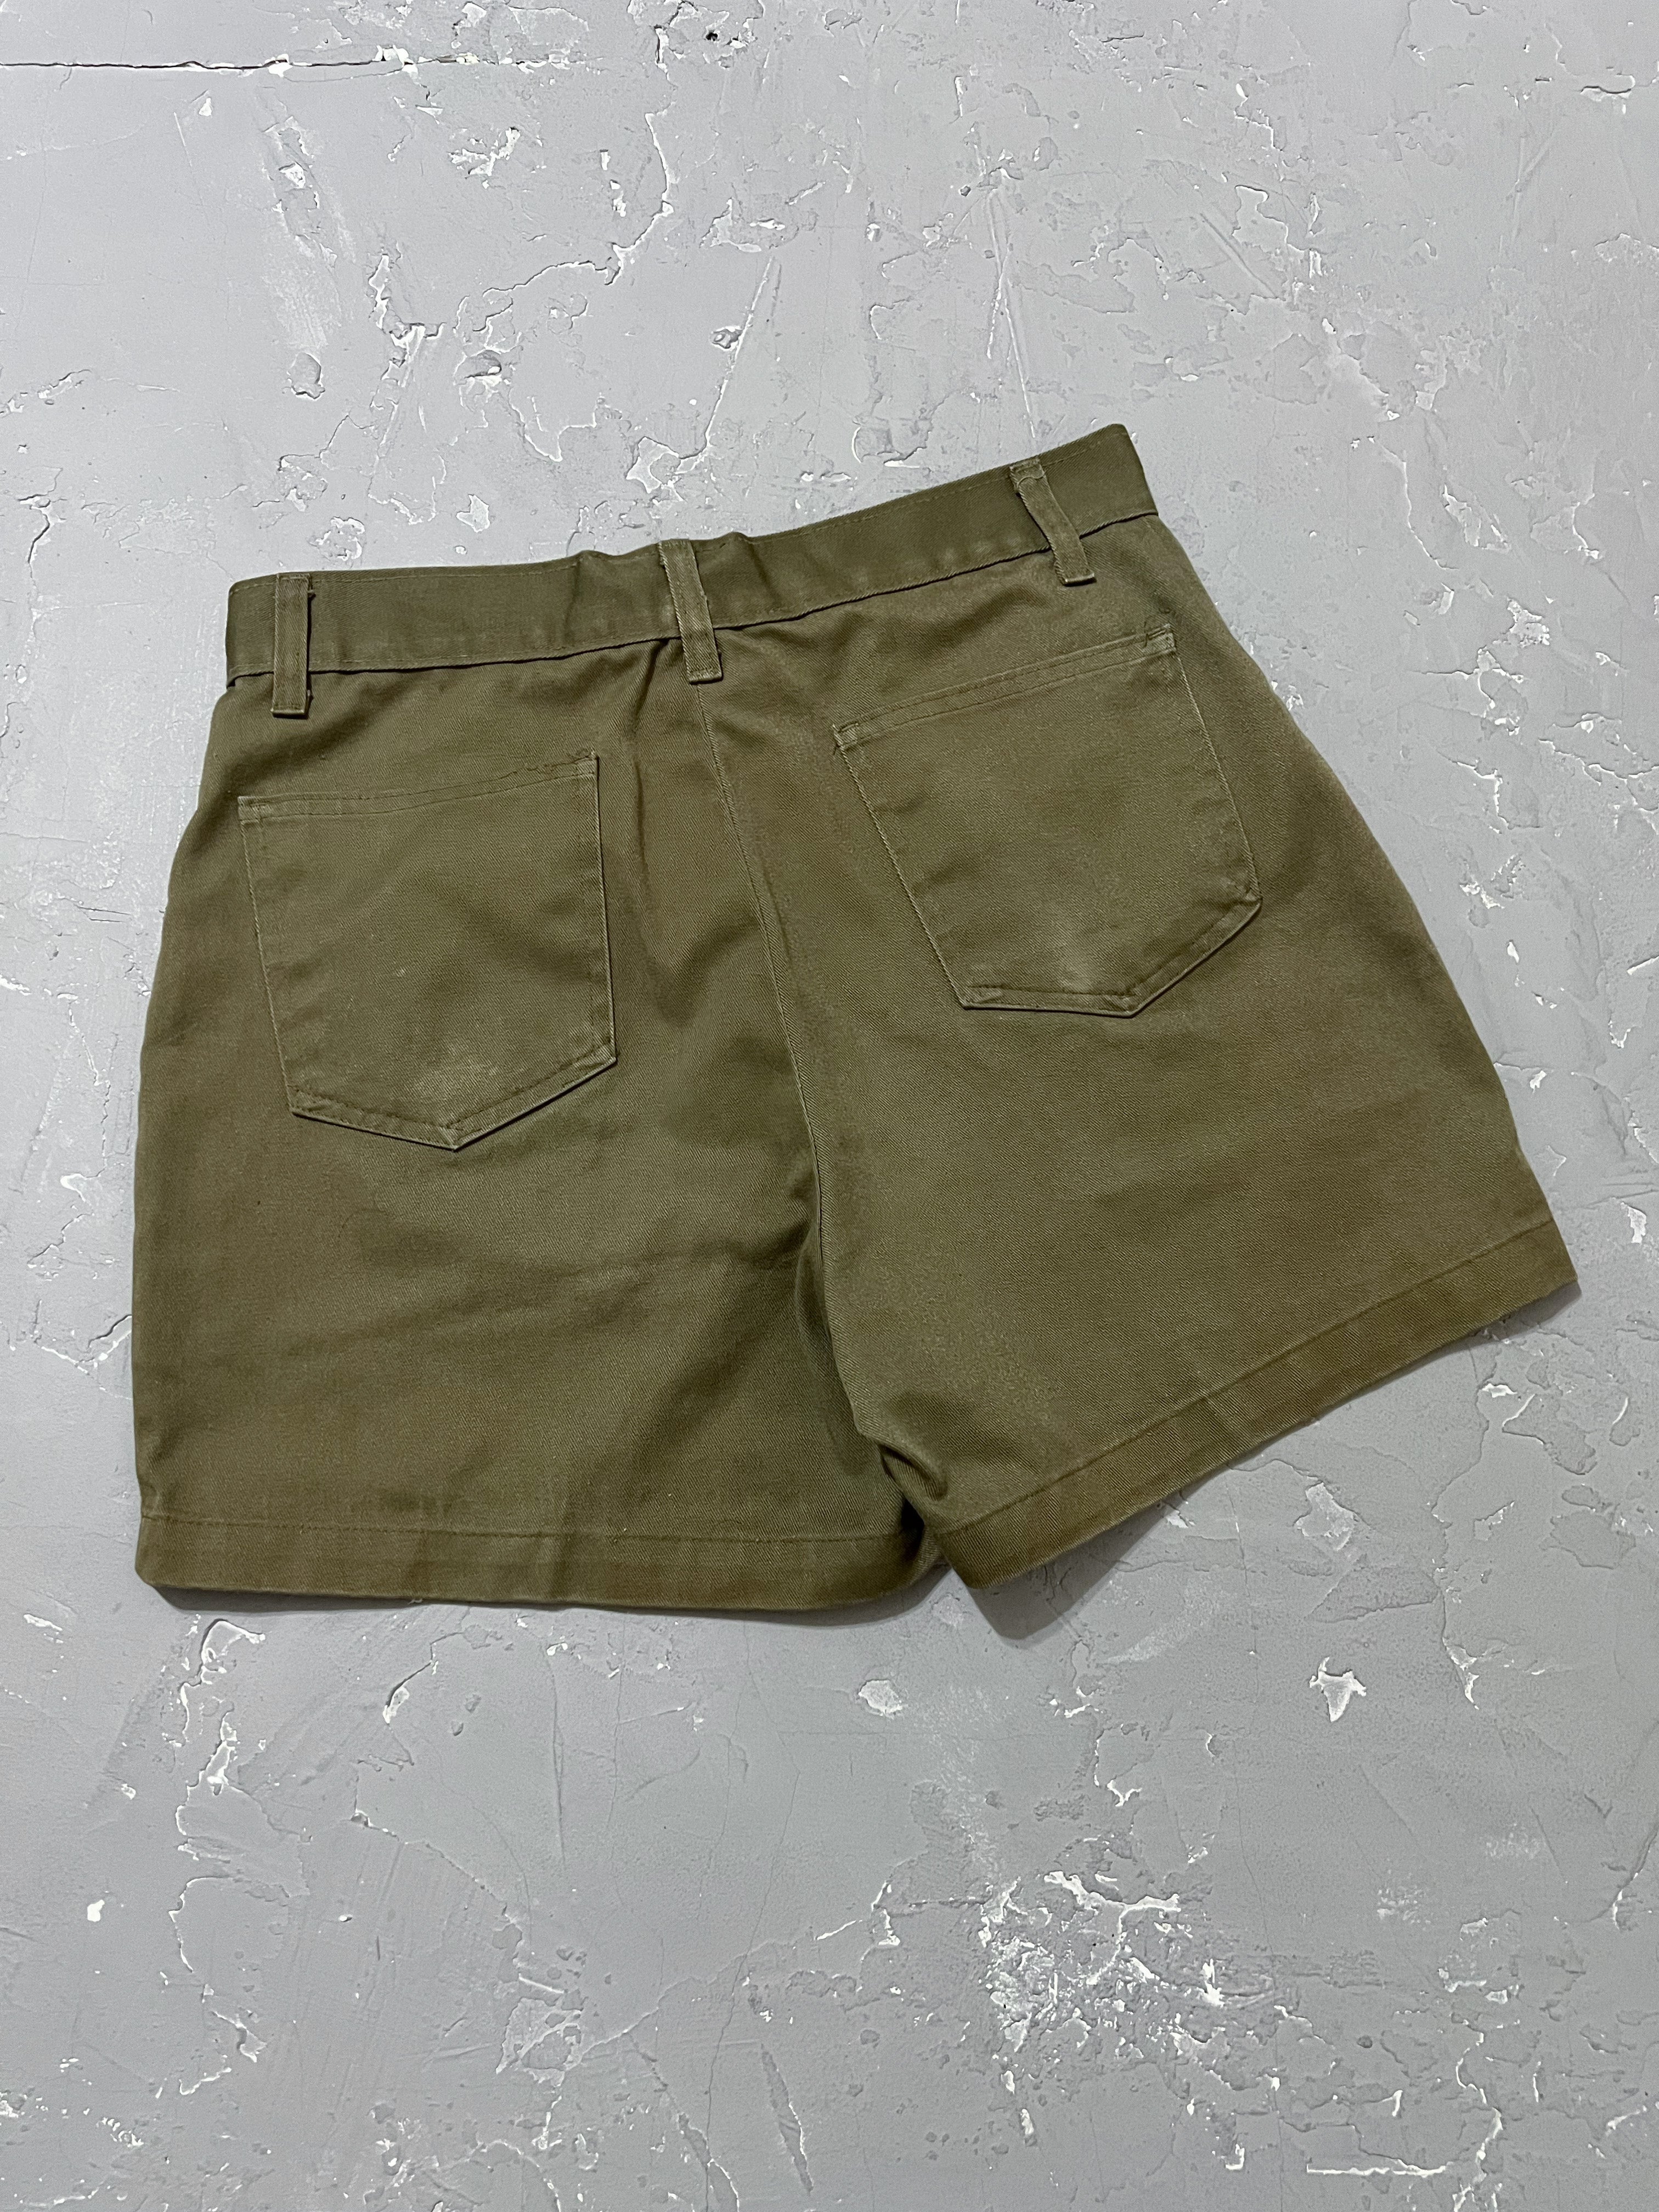 1980s Olive BSA Utility Shorts [31]